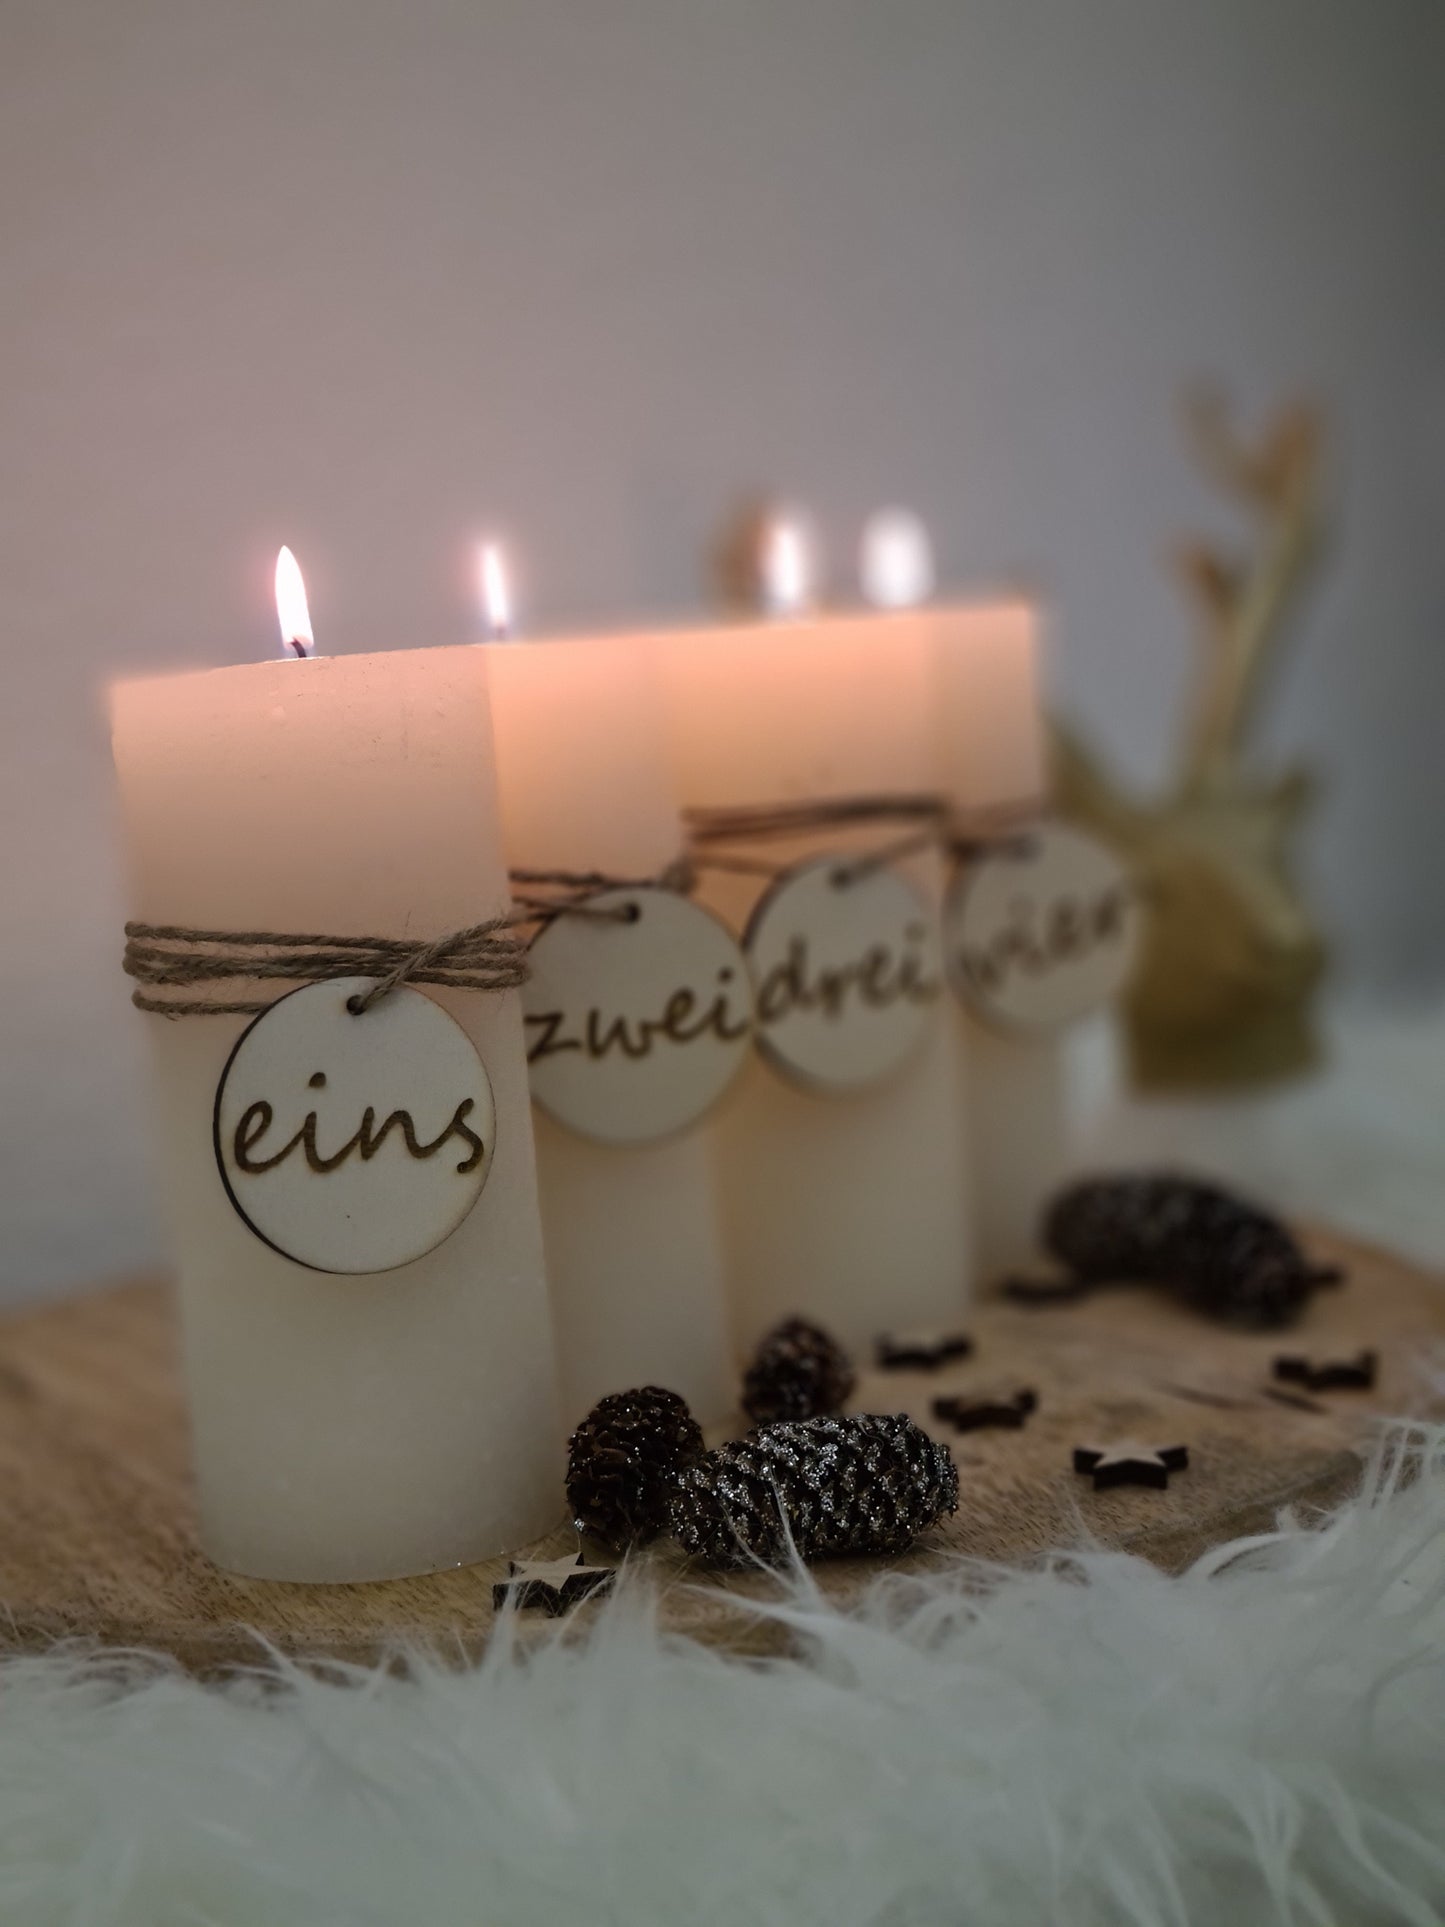 Adventskranz Zahlen aus Garapa Holz - 4er Set - Weihnachten Dekoration - Advent - Adventskranzdekoration - Kerzenschmuck - Natur